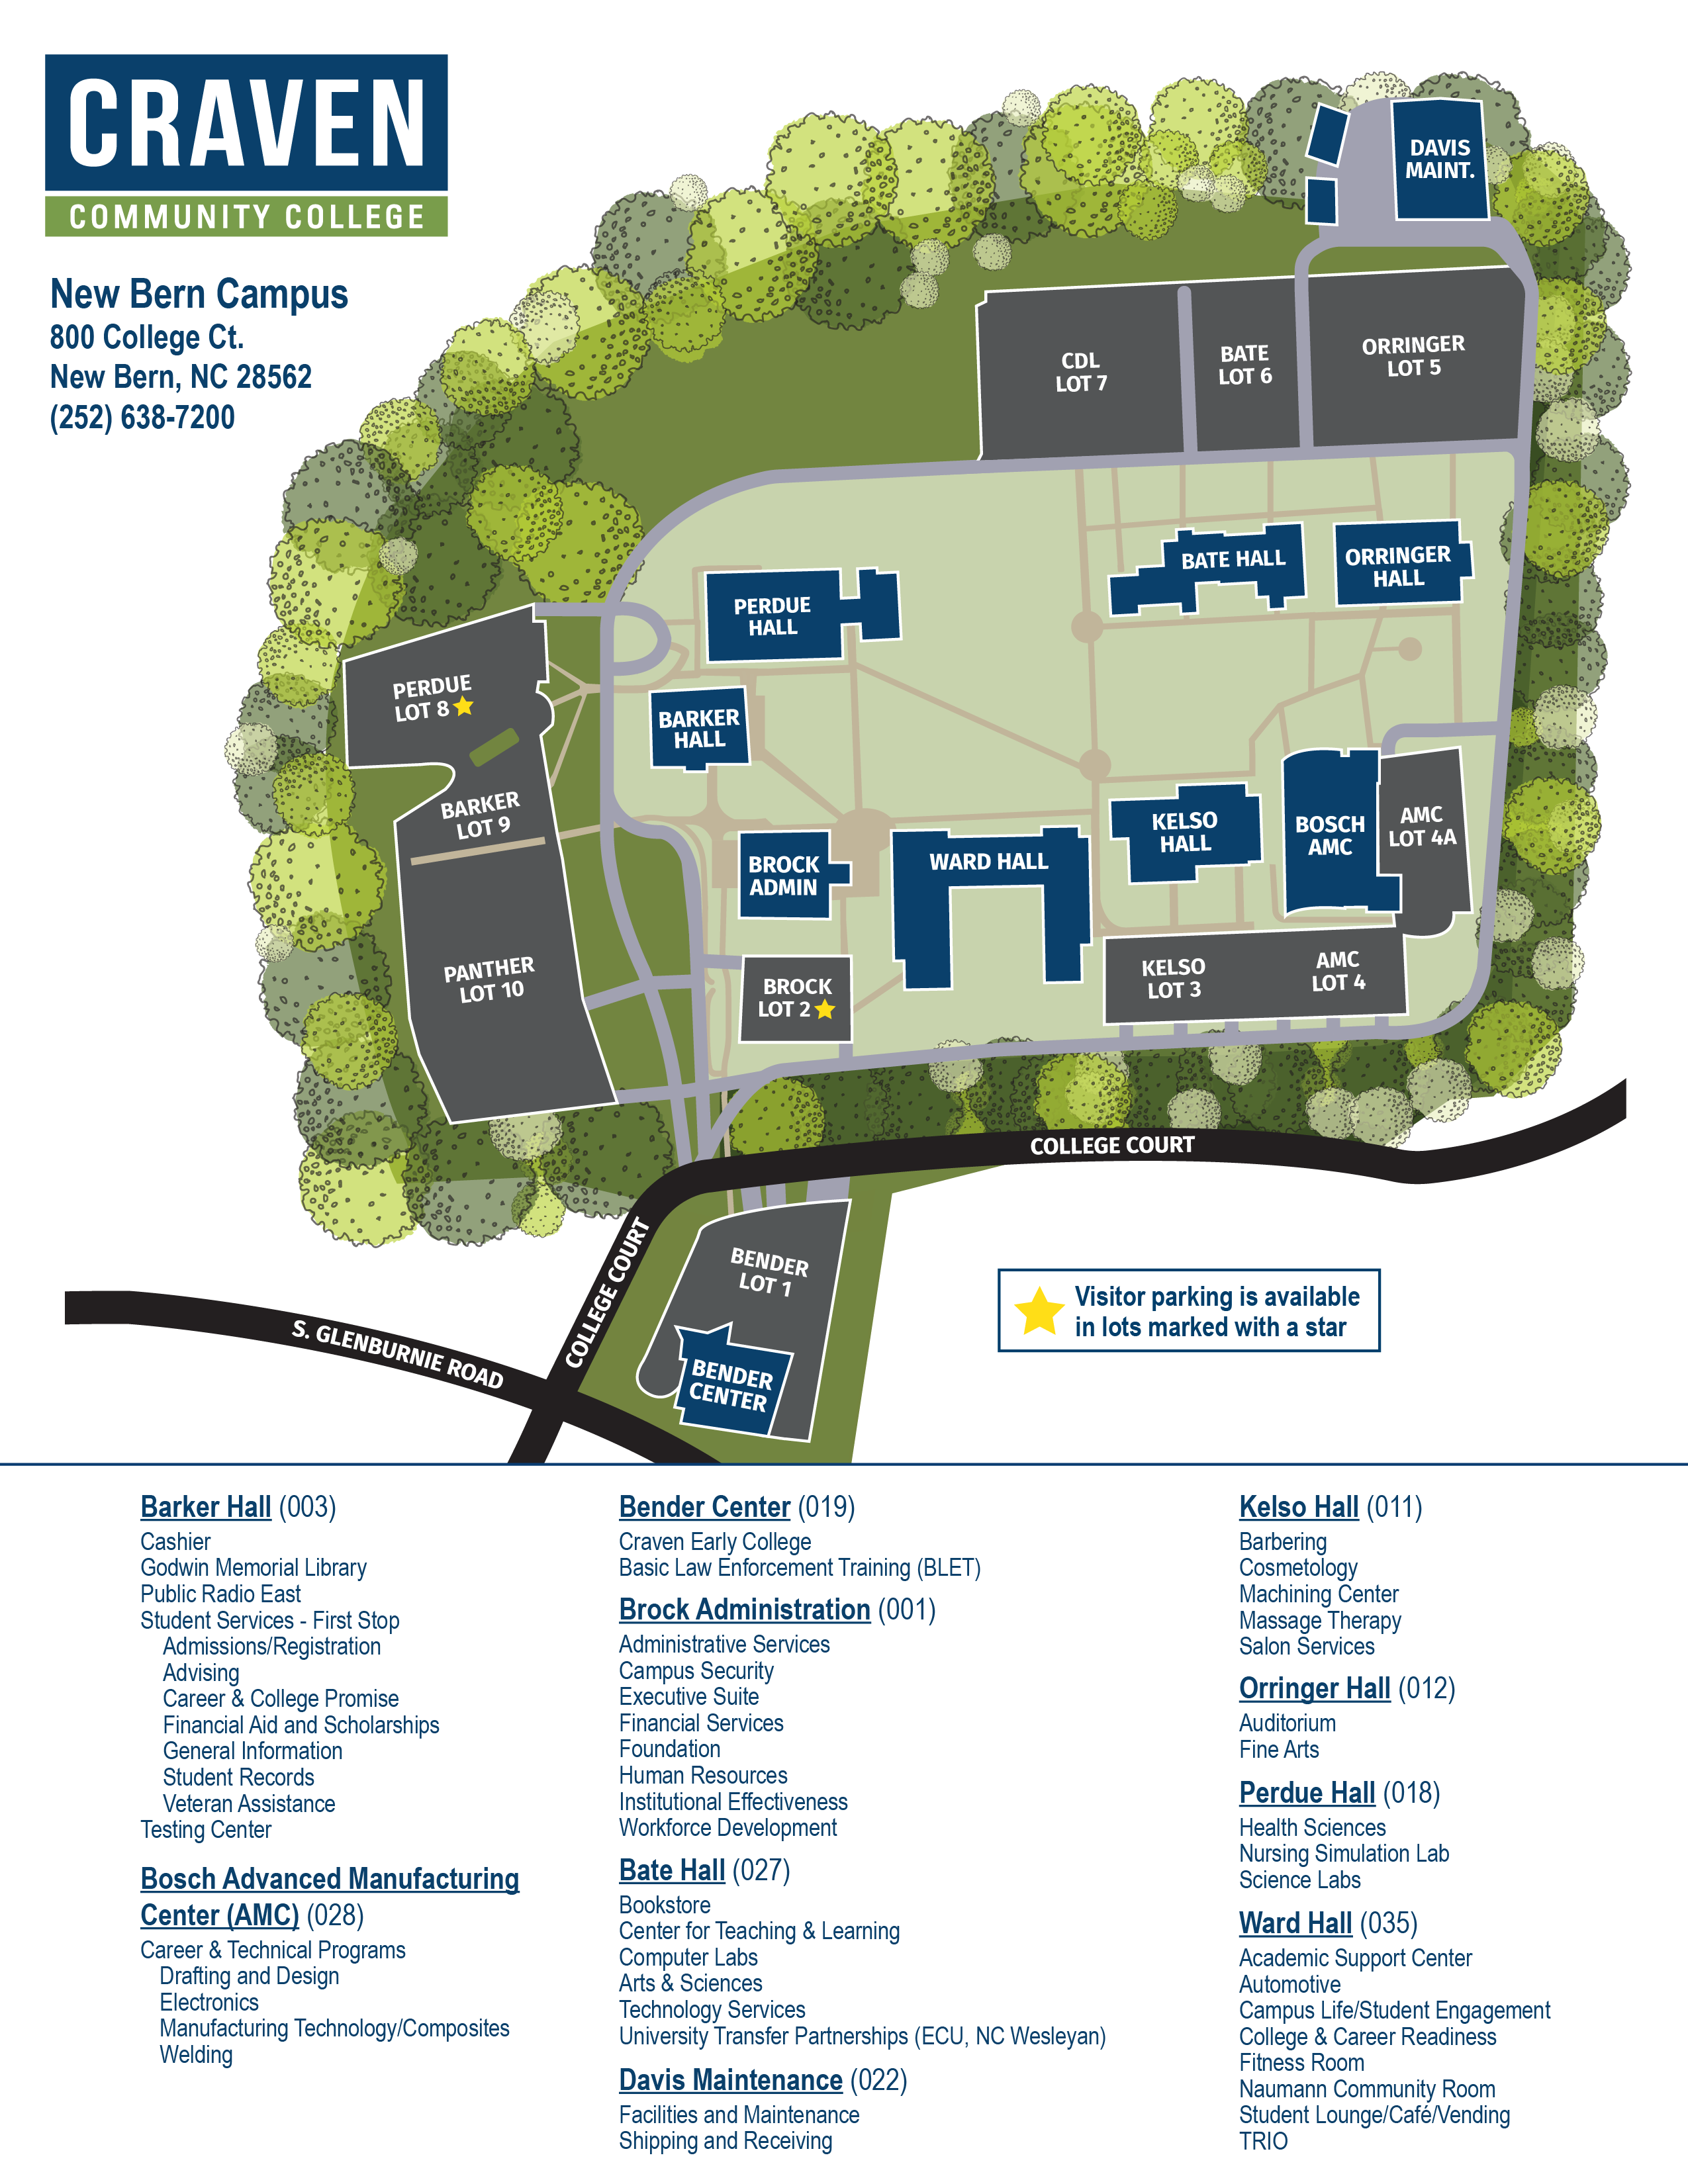 Craven Community College New Bern Campus Map